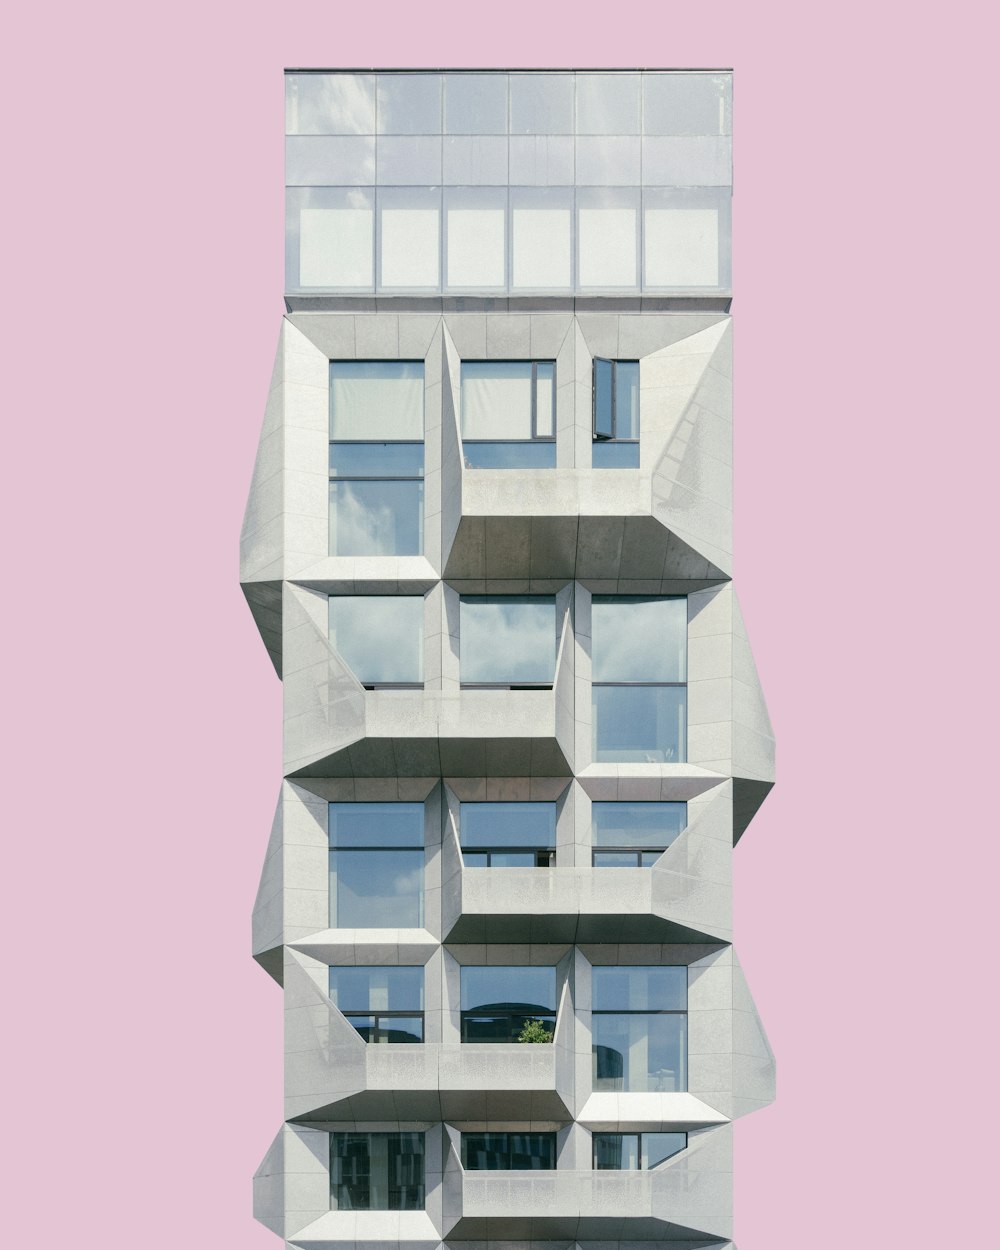 Edifício de concreto cinza de vários andares